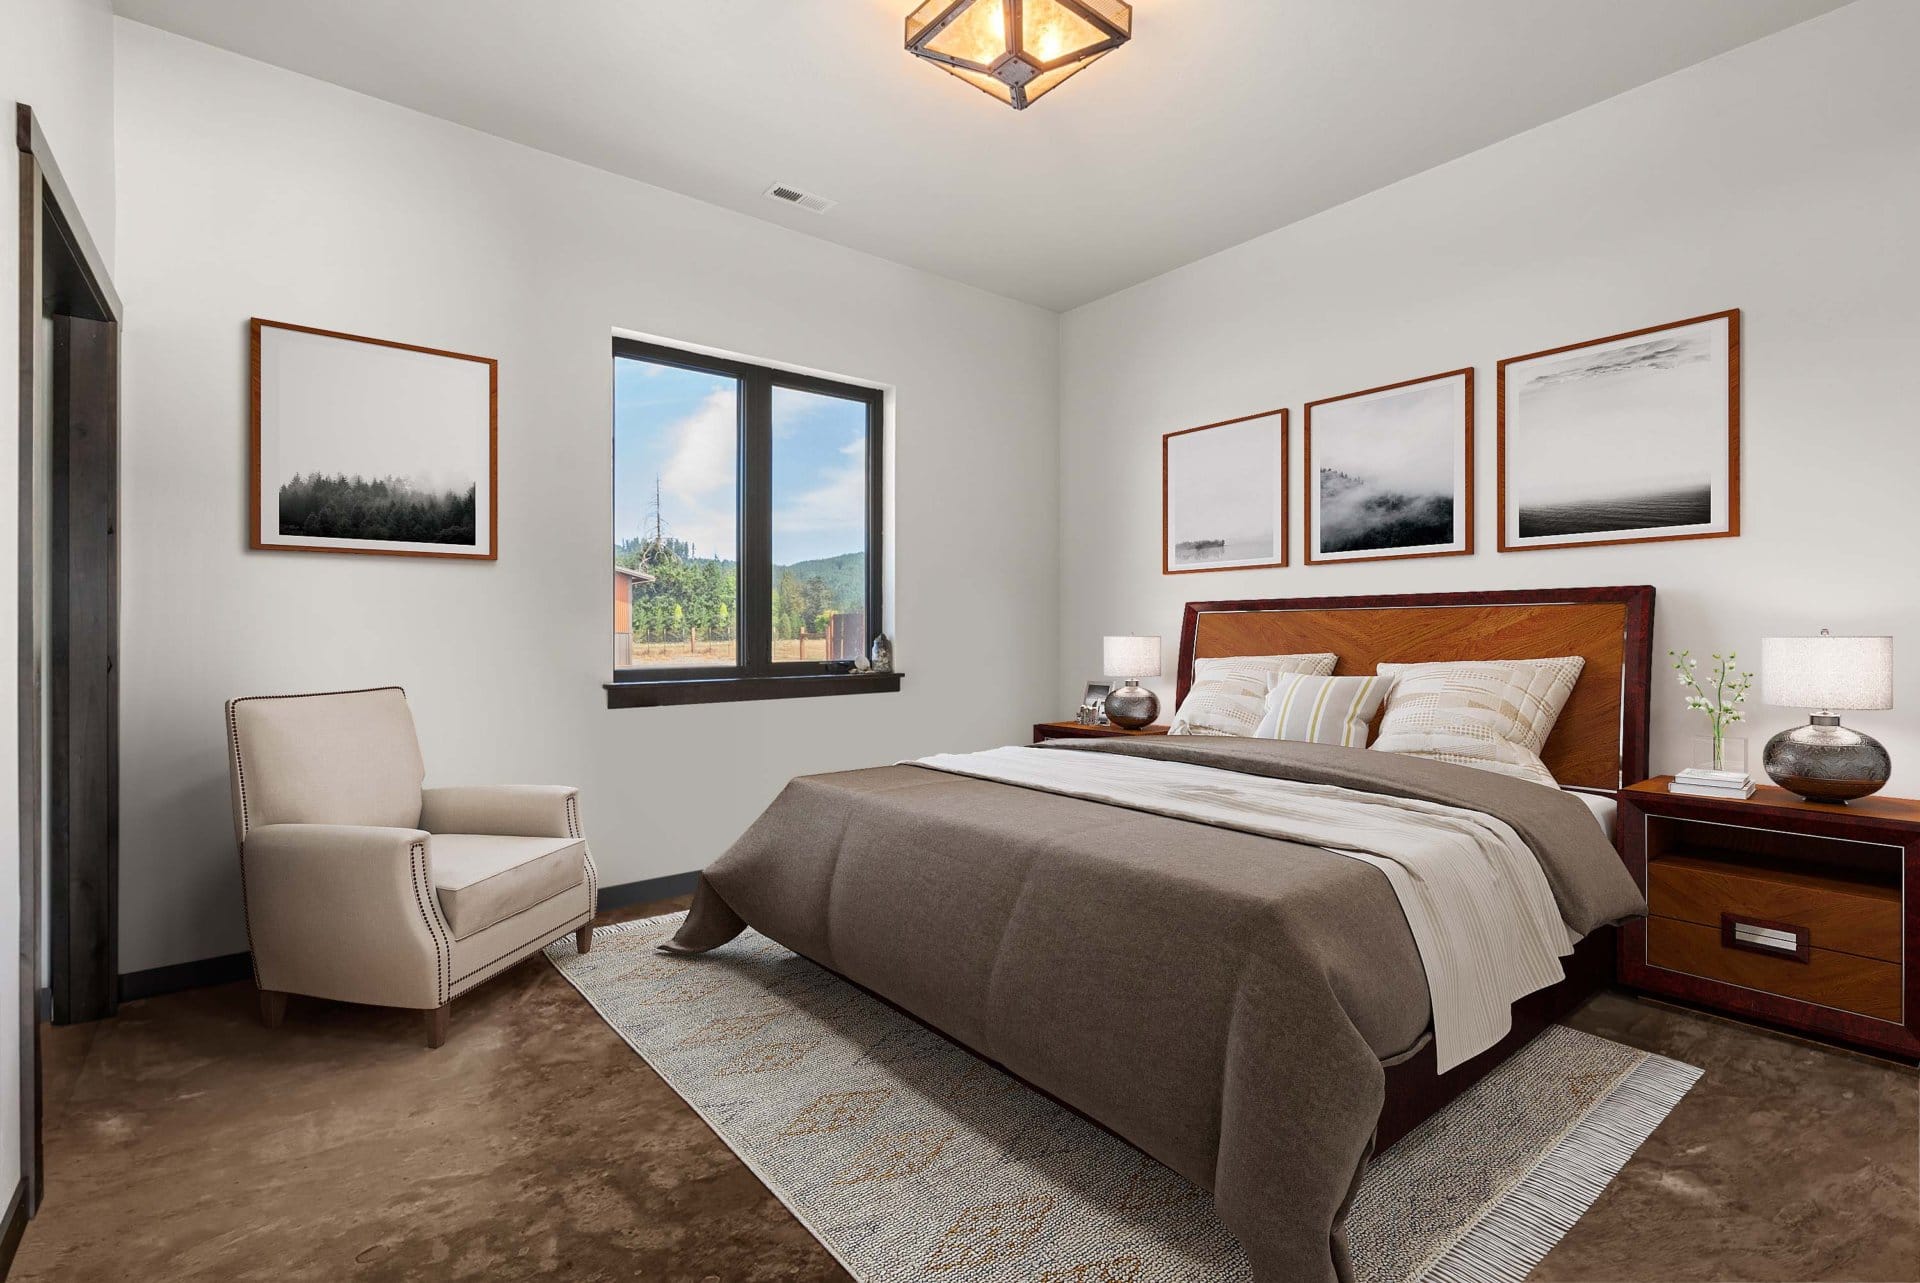 luxury guest bedroom washington valley lake ranch